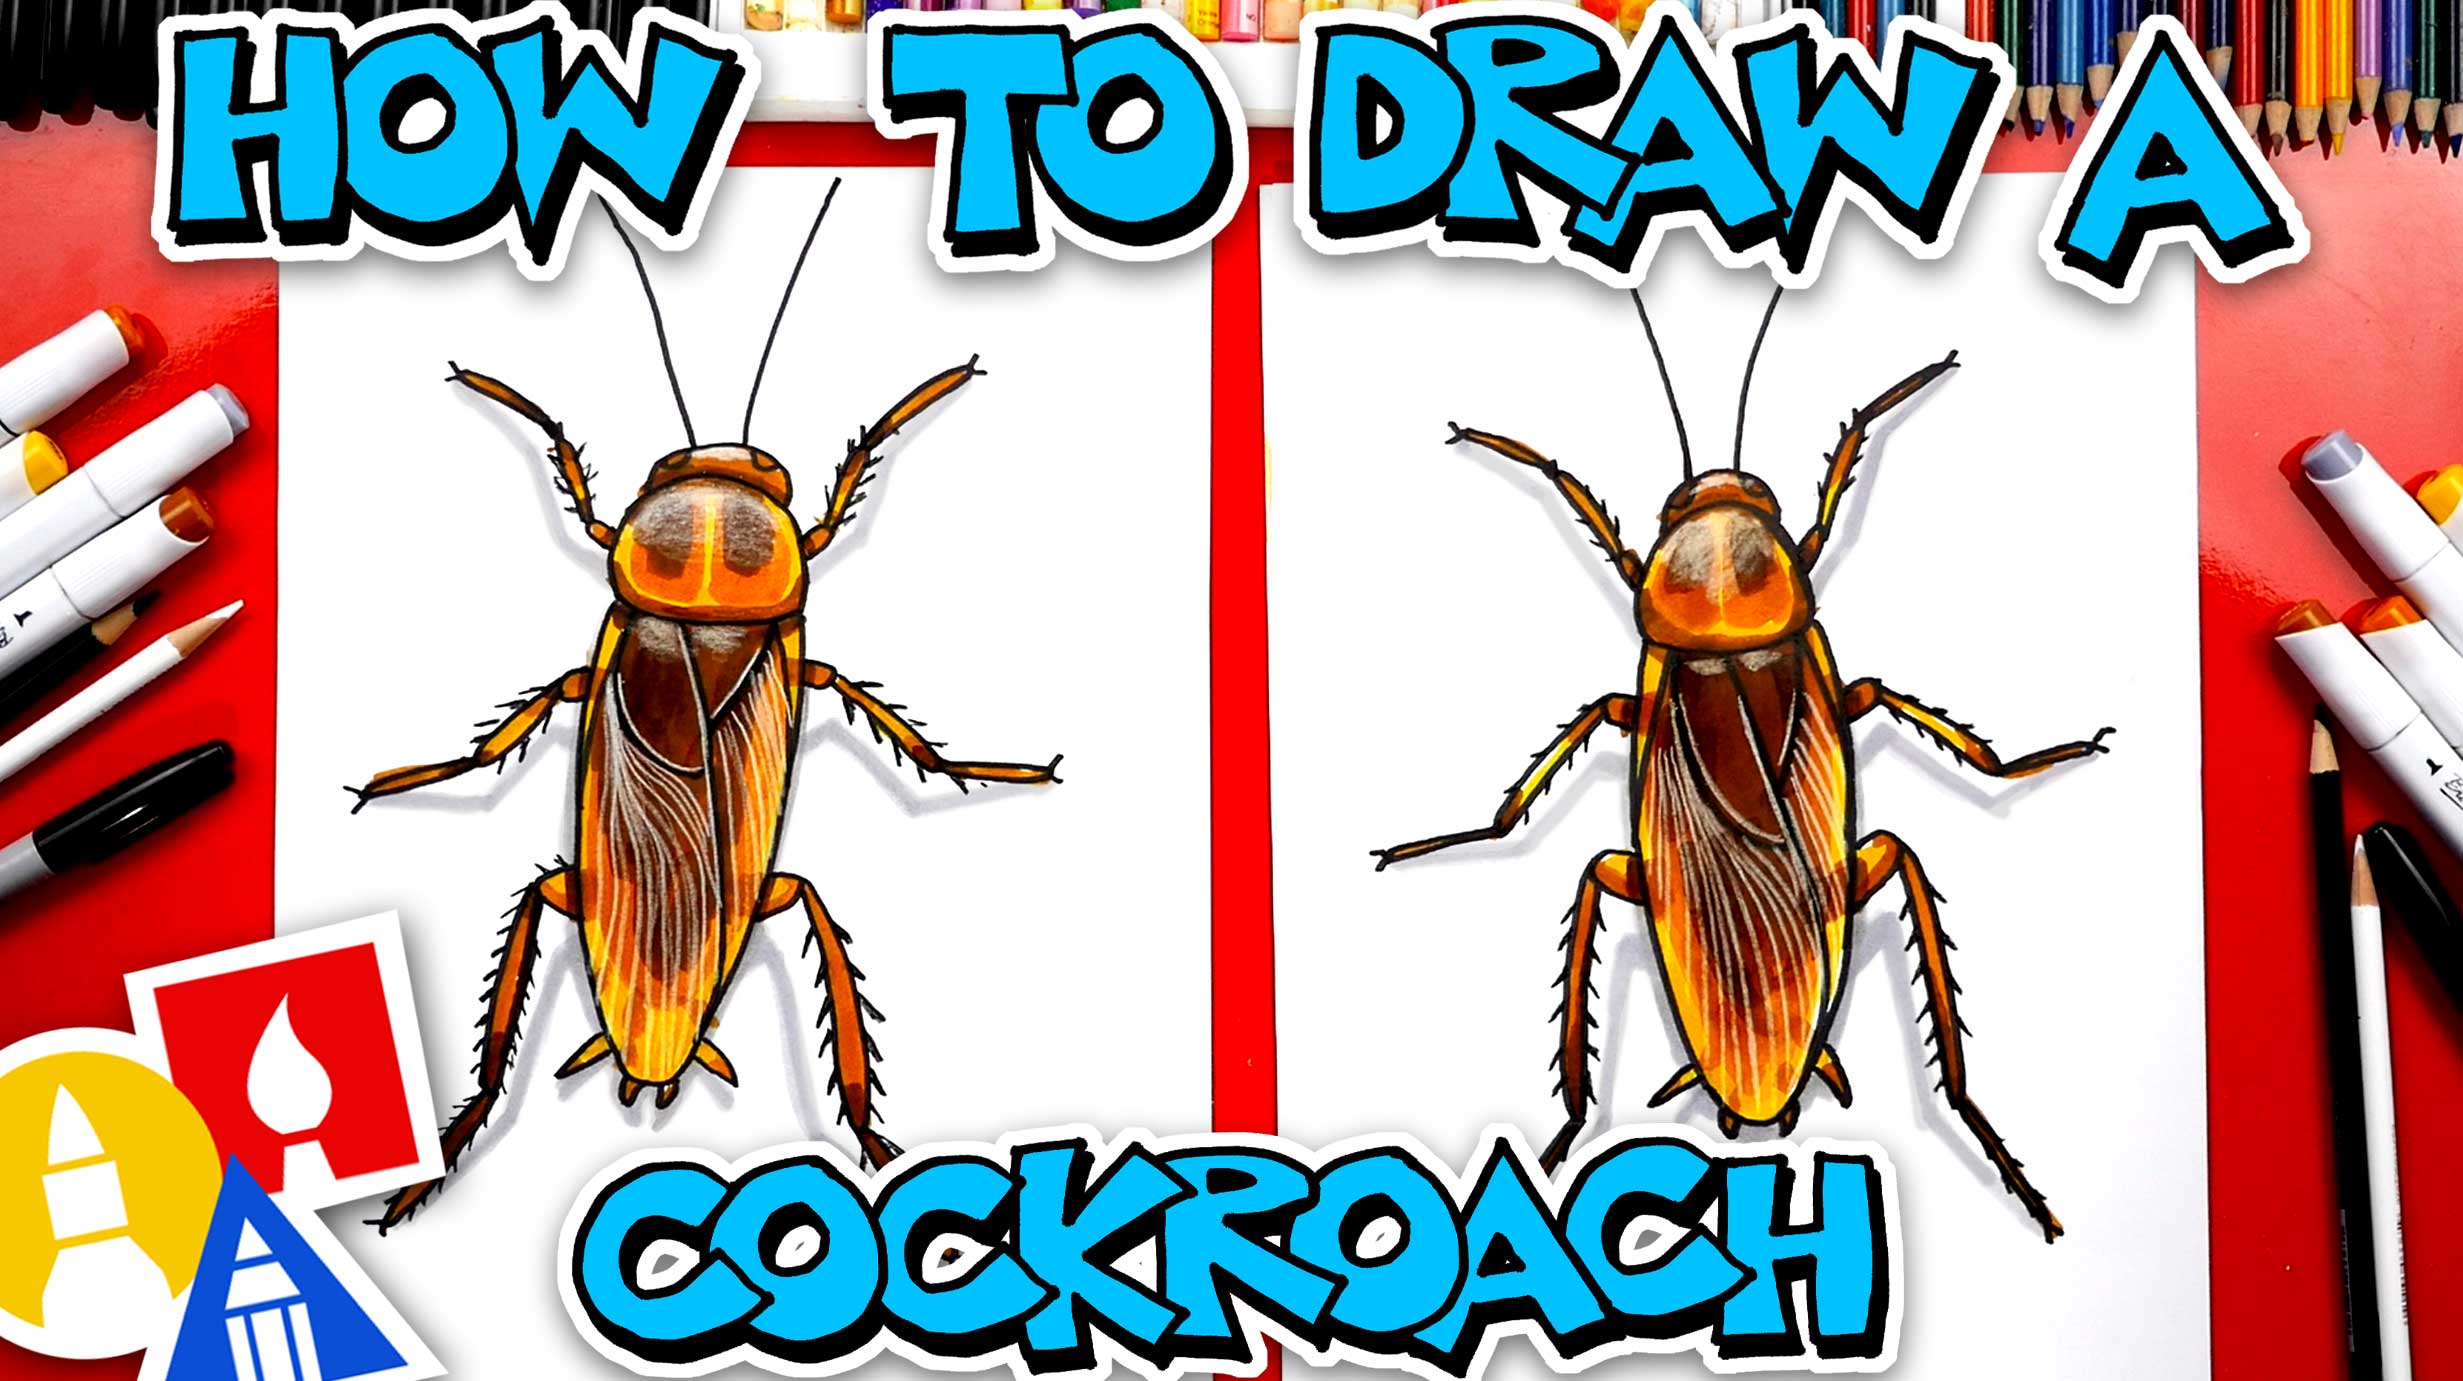 Cockroach vector design vector animal illustration for tshirt sketch  tattoo design  CanStock